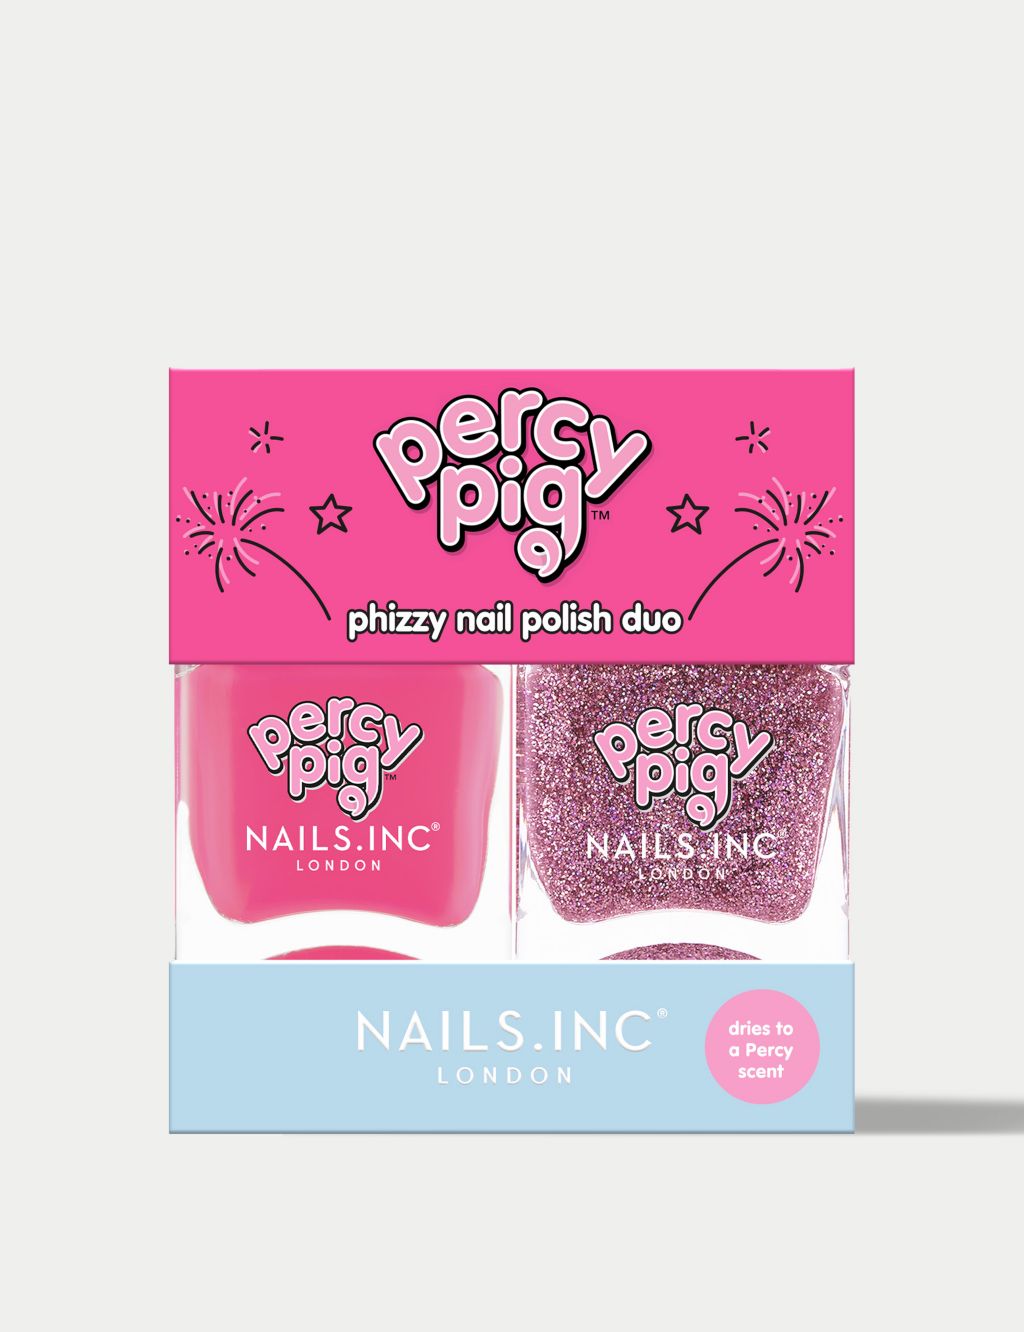 Nails.INC Percy Pig Phizzy Nail Polish Duo 2x14ml